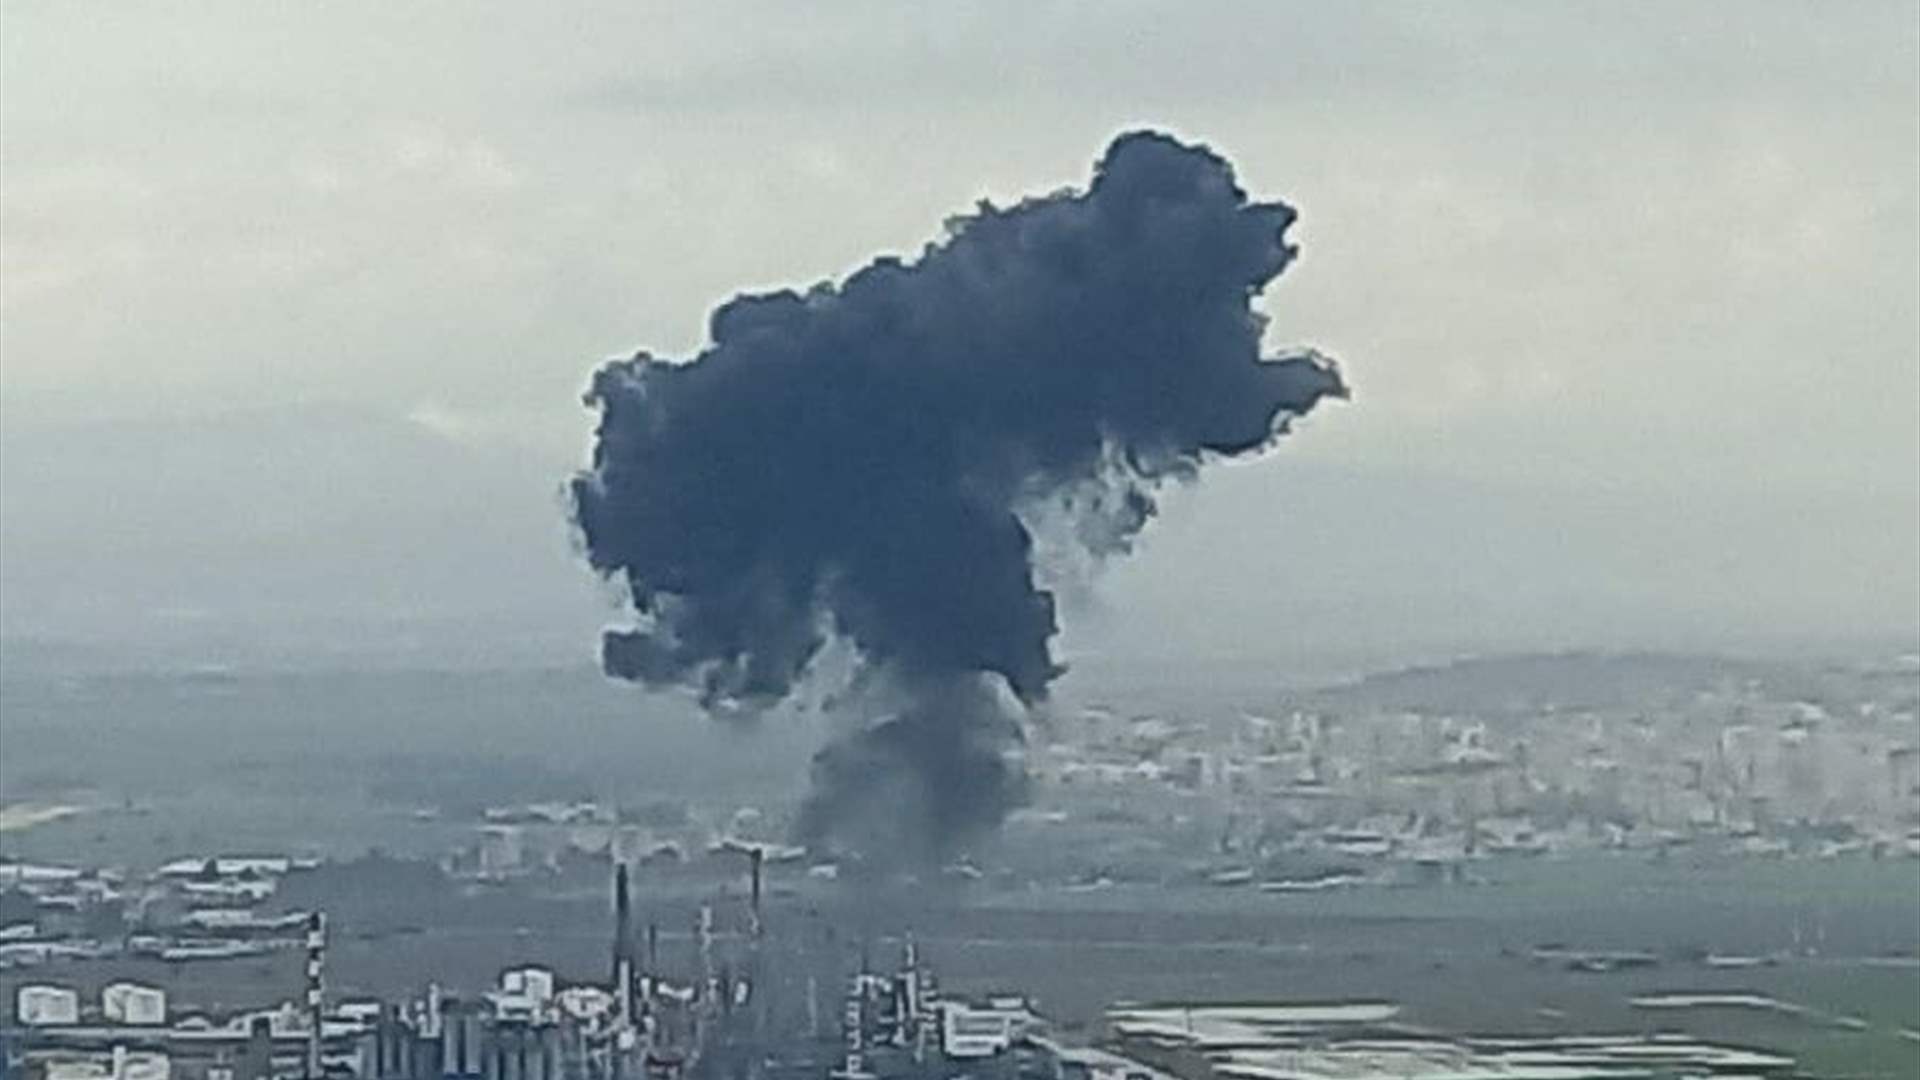 Israeli media: Massive explosion sounded in Haifa Bay near oil refineries